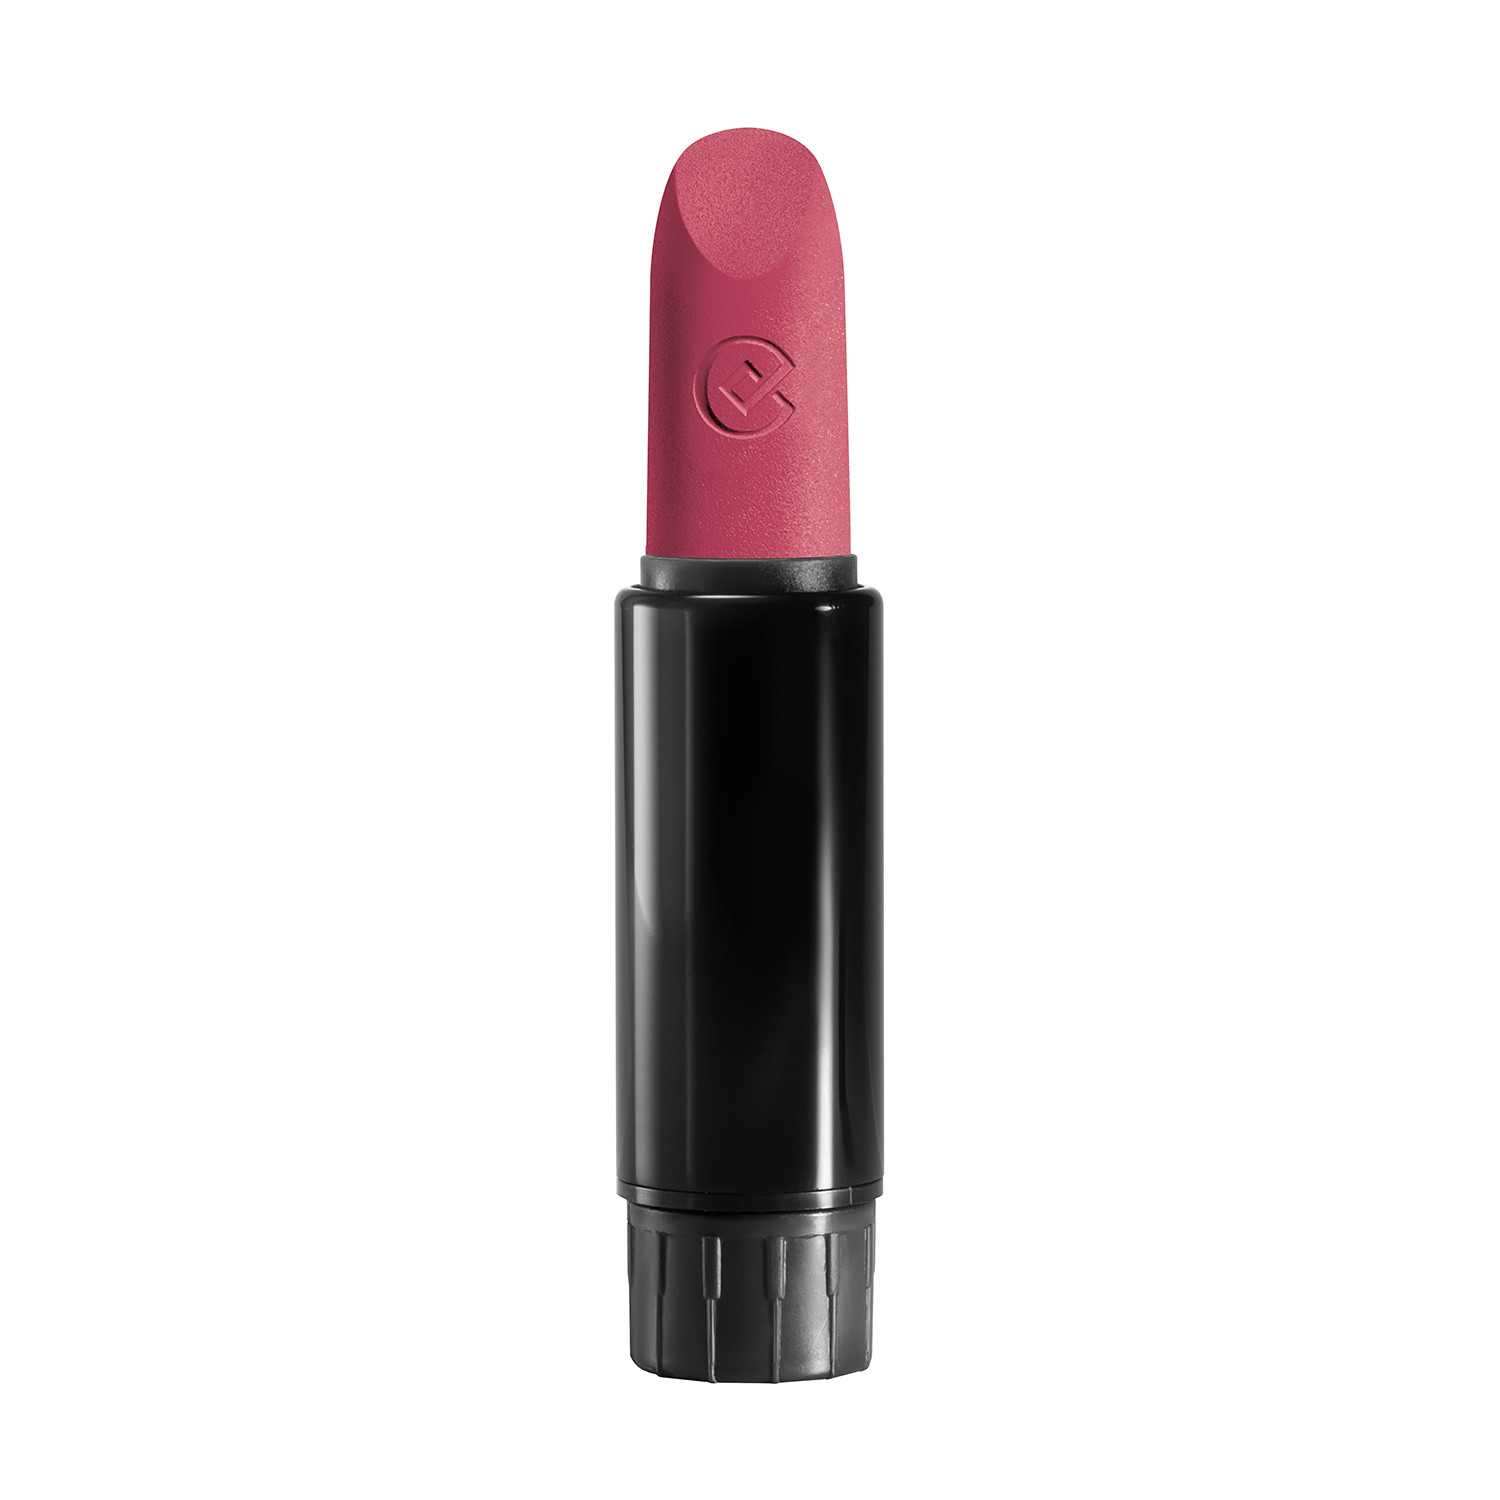 Collistar - Pure matte lipstick refill - 113 Autumn Berry, Pink Flamingo, large image number 0